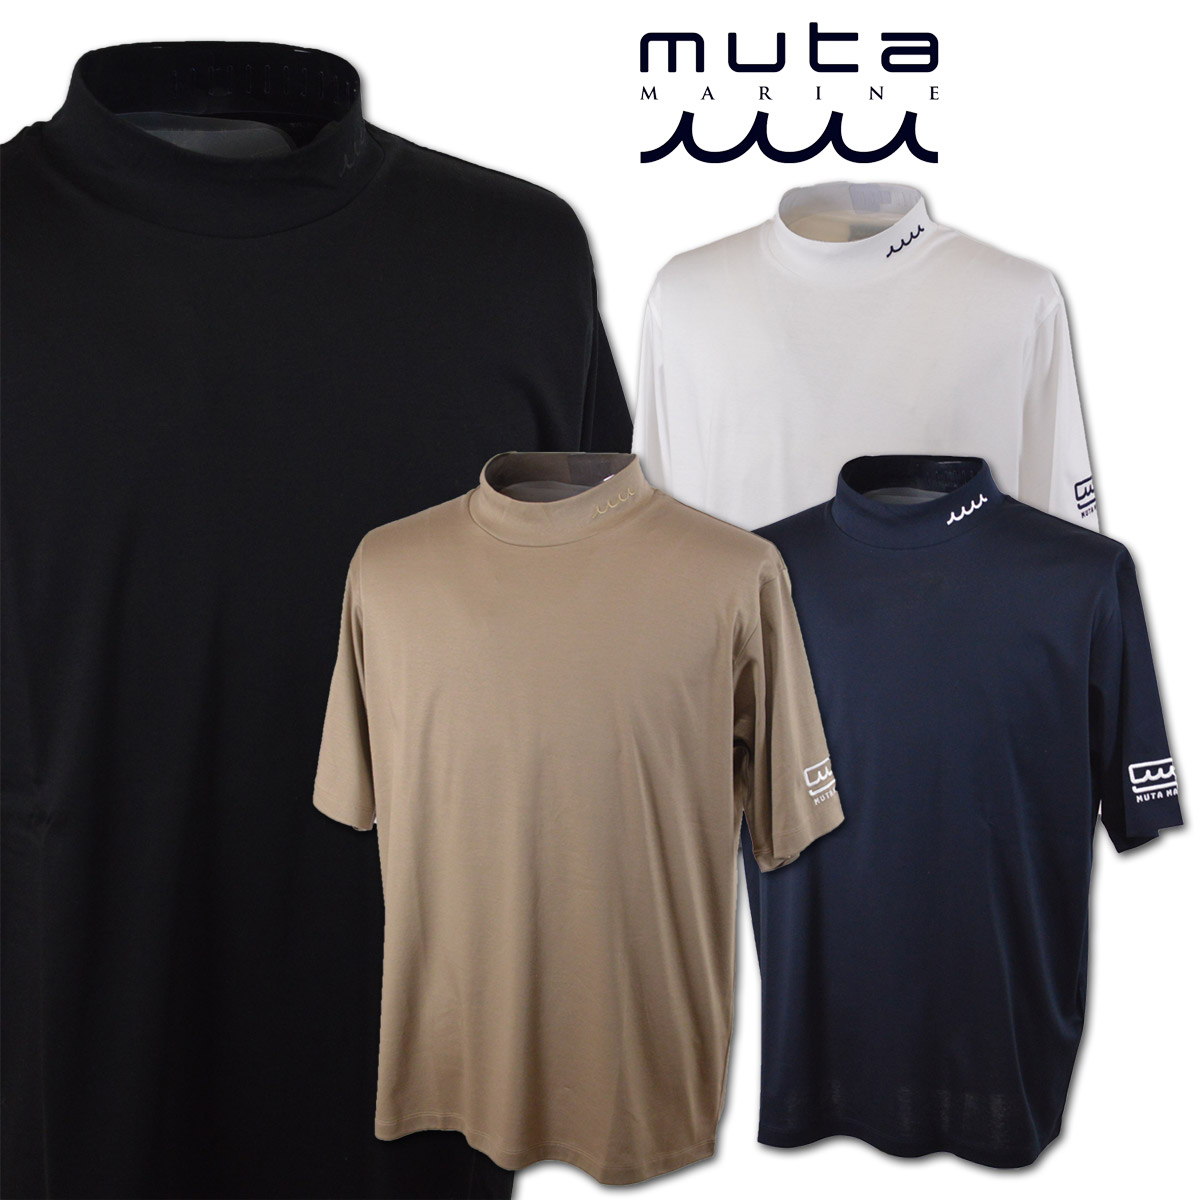 muta メンズ 半袖ハイネックシャツ (M)(L)(LL) ムータ マリン marine ゴルフウェア mmjc446201